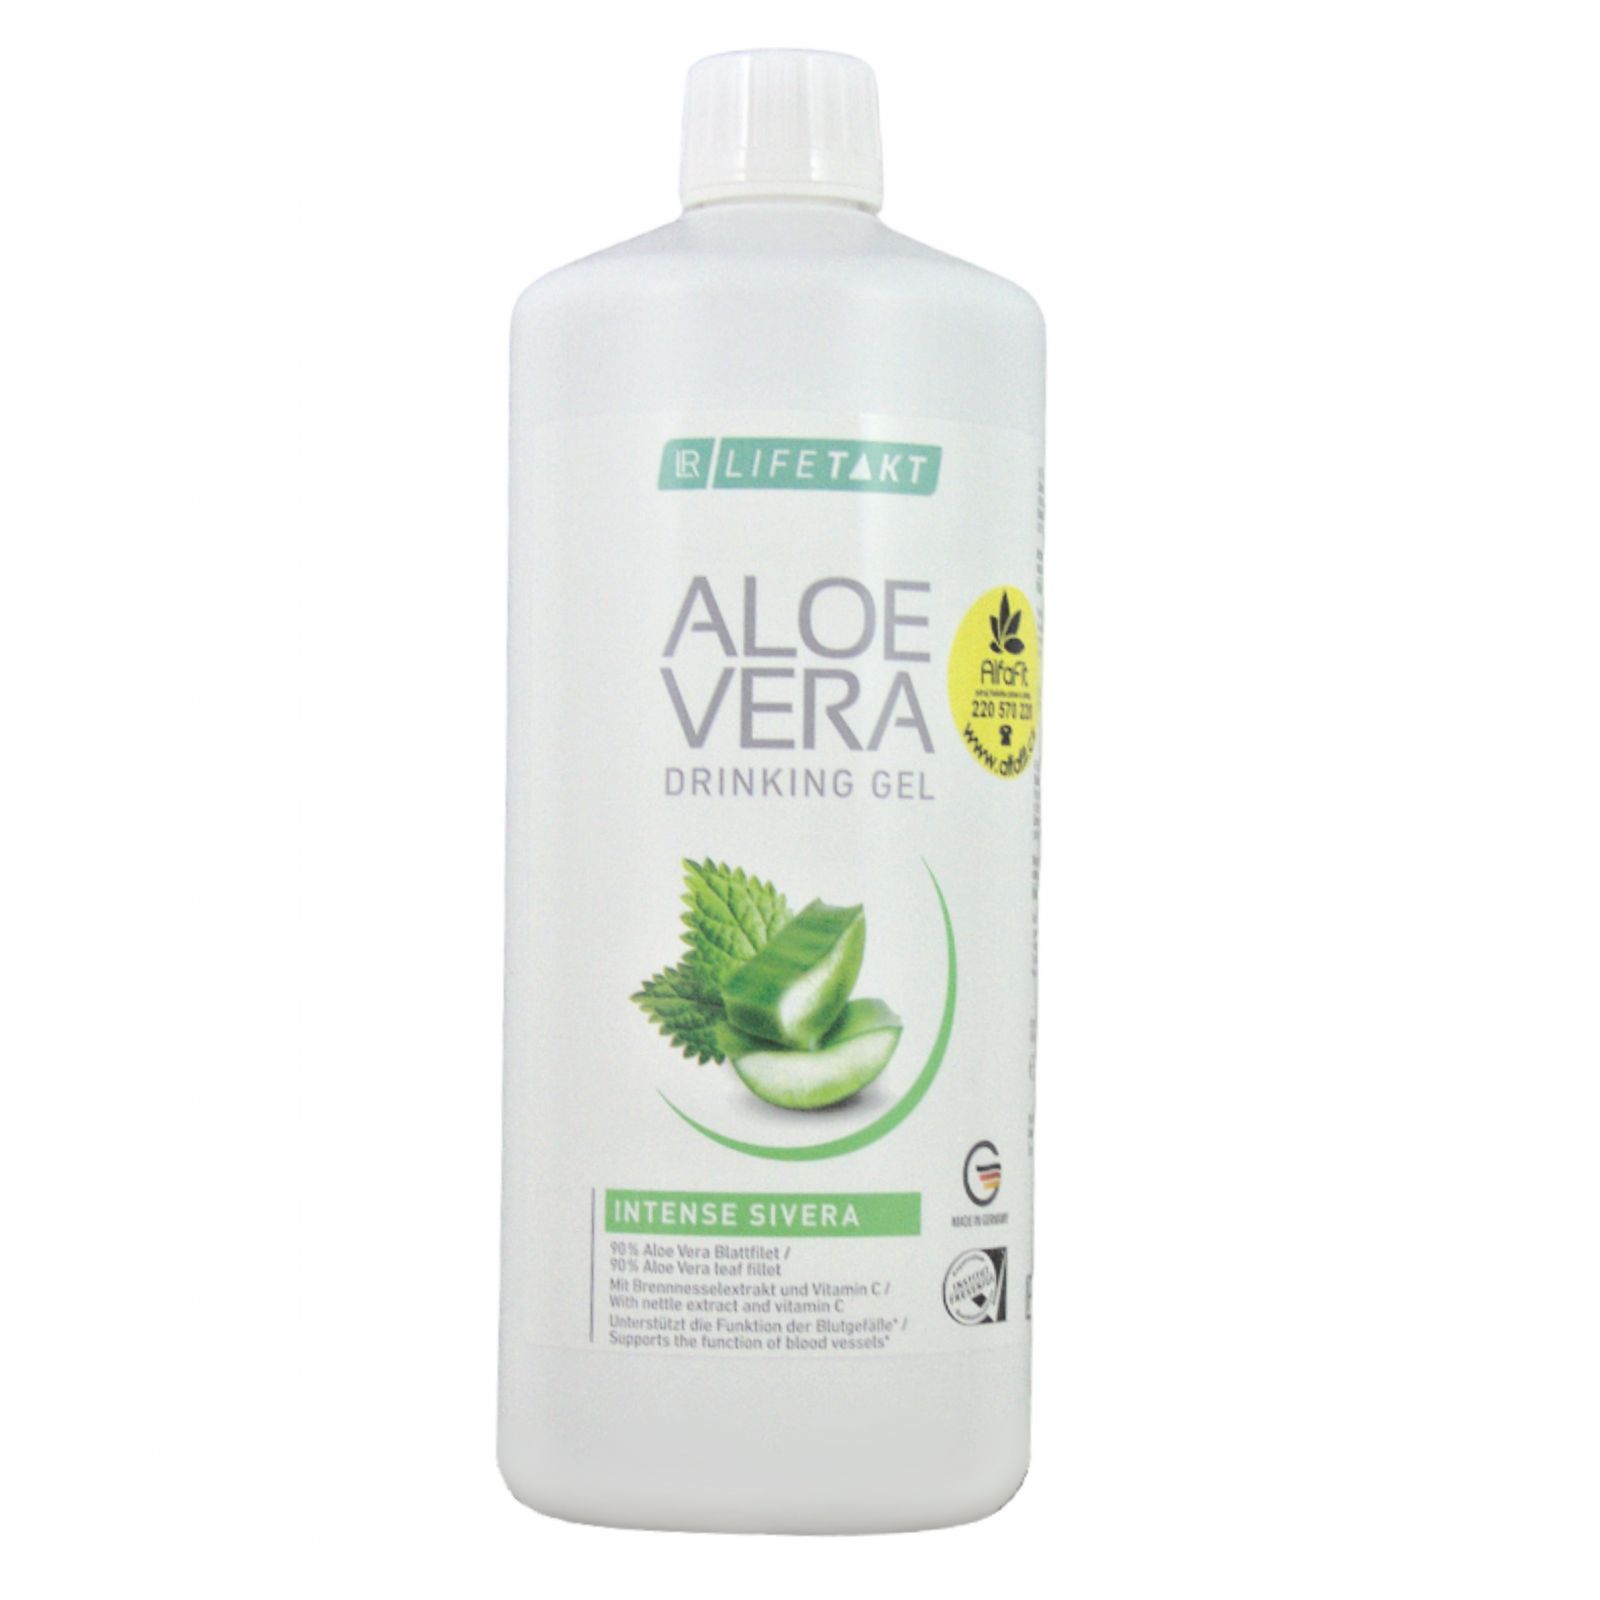 LR LIFETAKT Aloe Vera Drinking Gel Intense Sivera 1000 ml